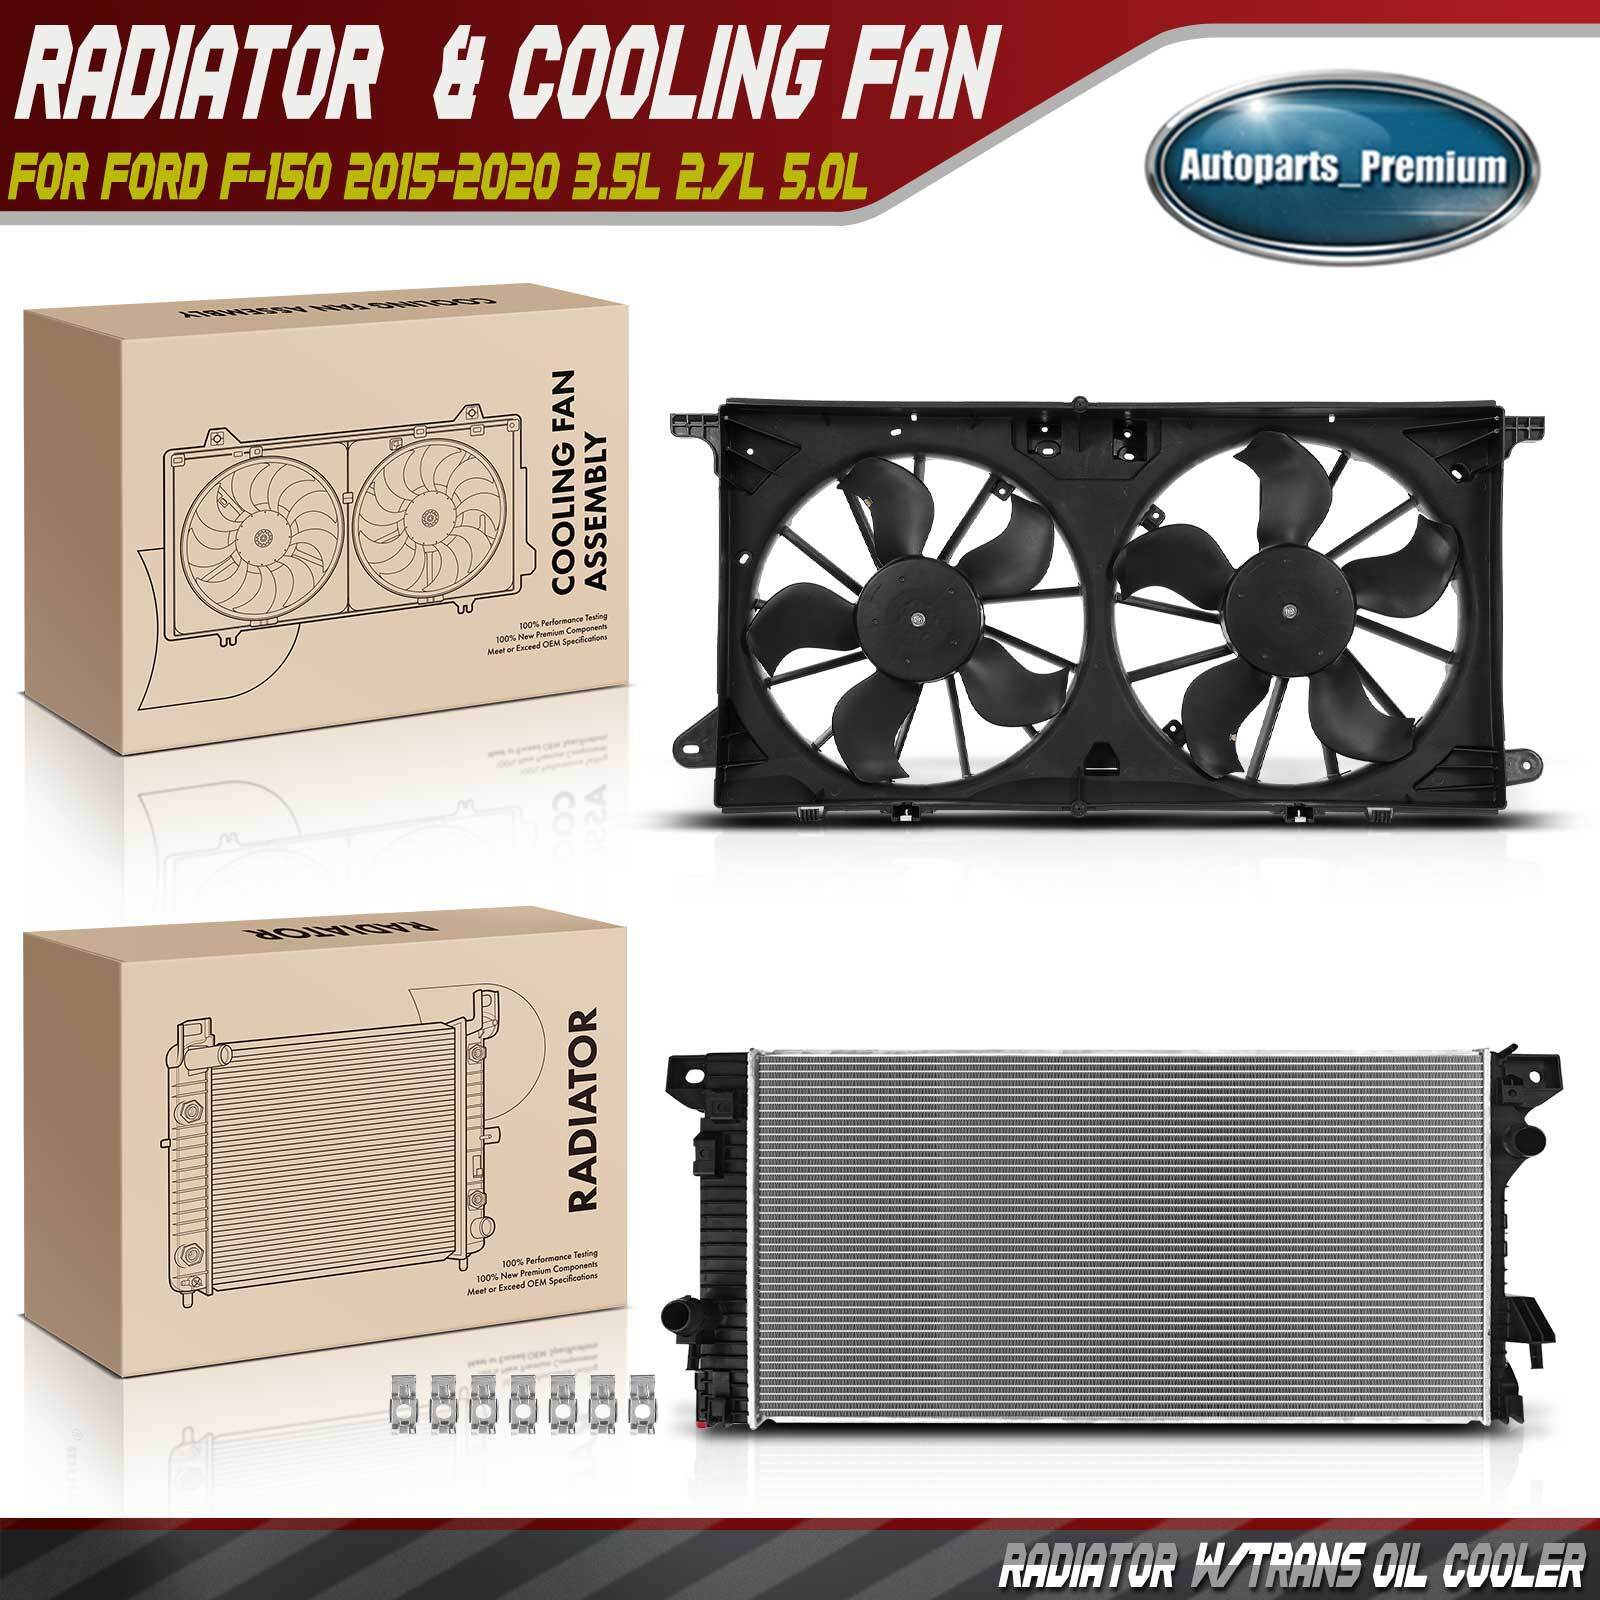 Radiator & Dual Cooling Fan w/ Shroud for Ford F-150 2015-2020 3.5L 2.7L 5.0L